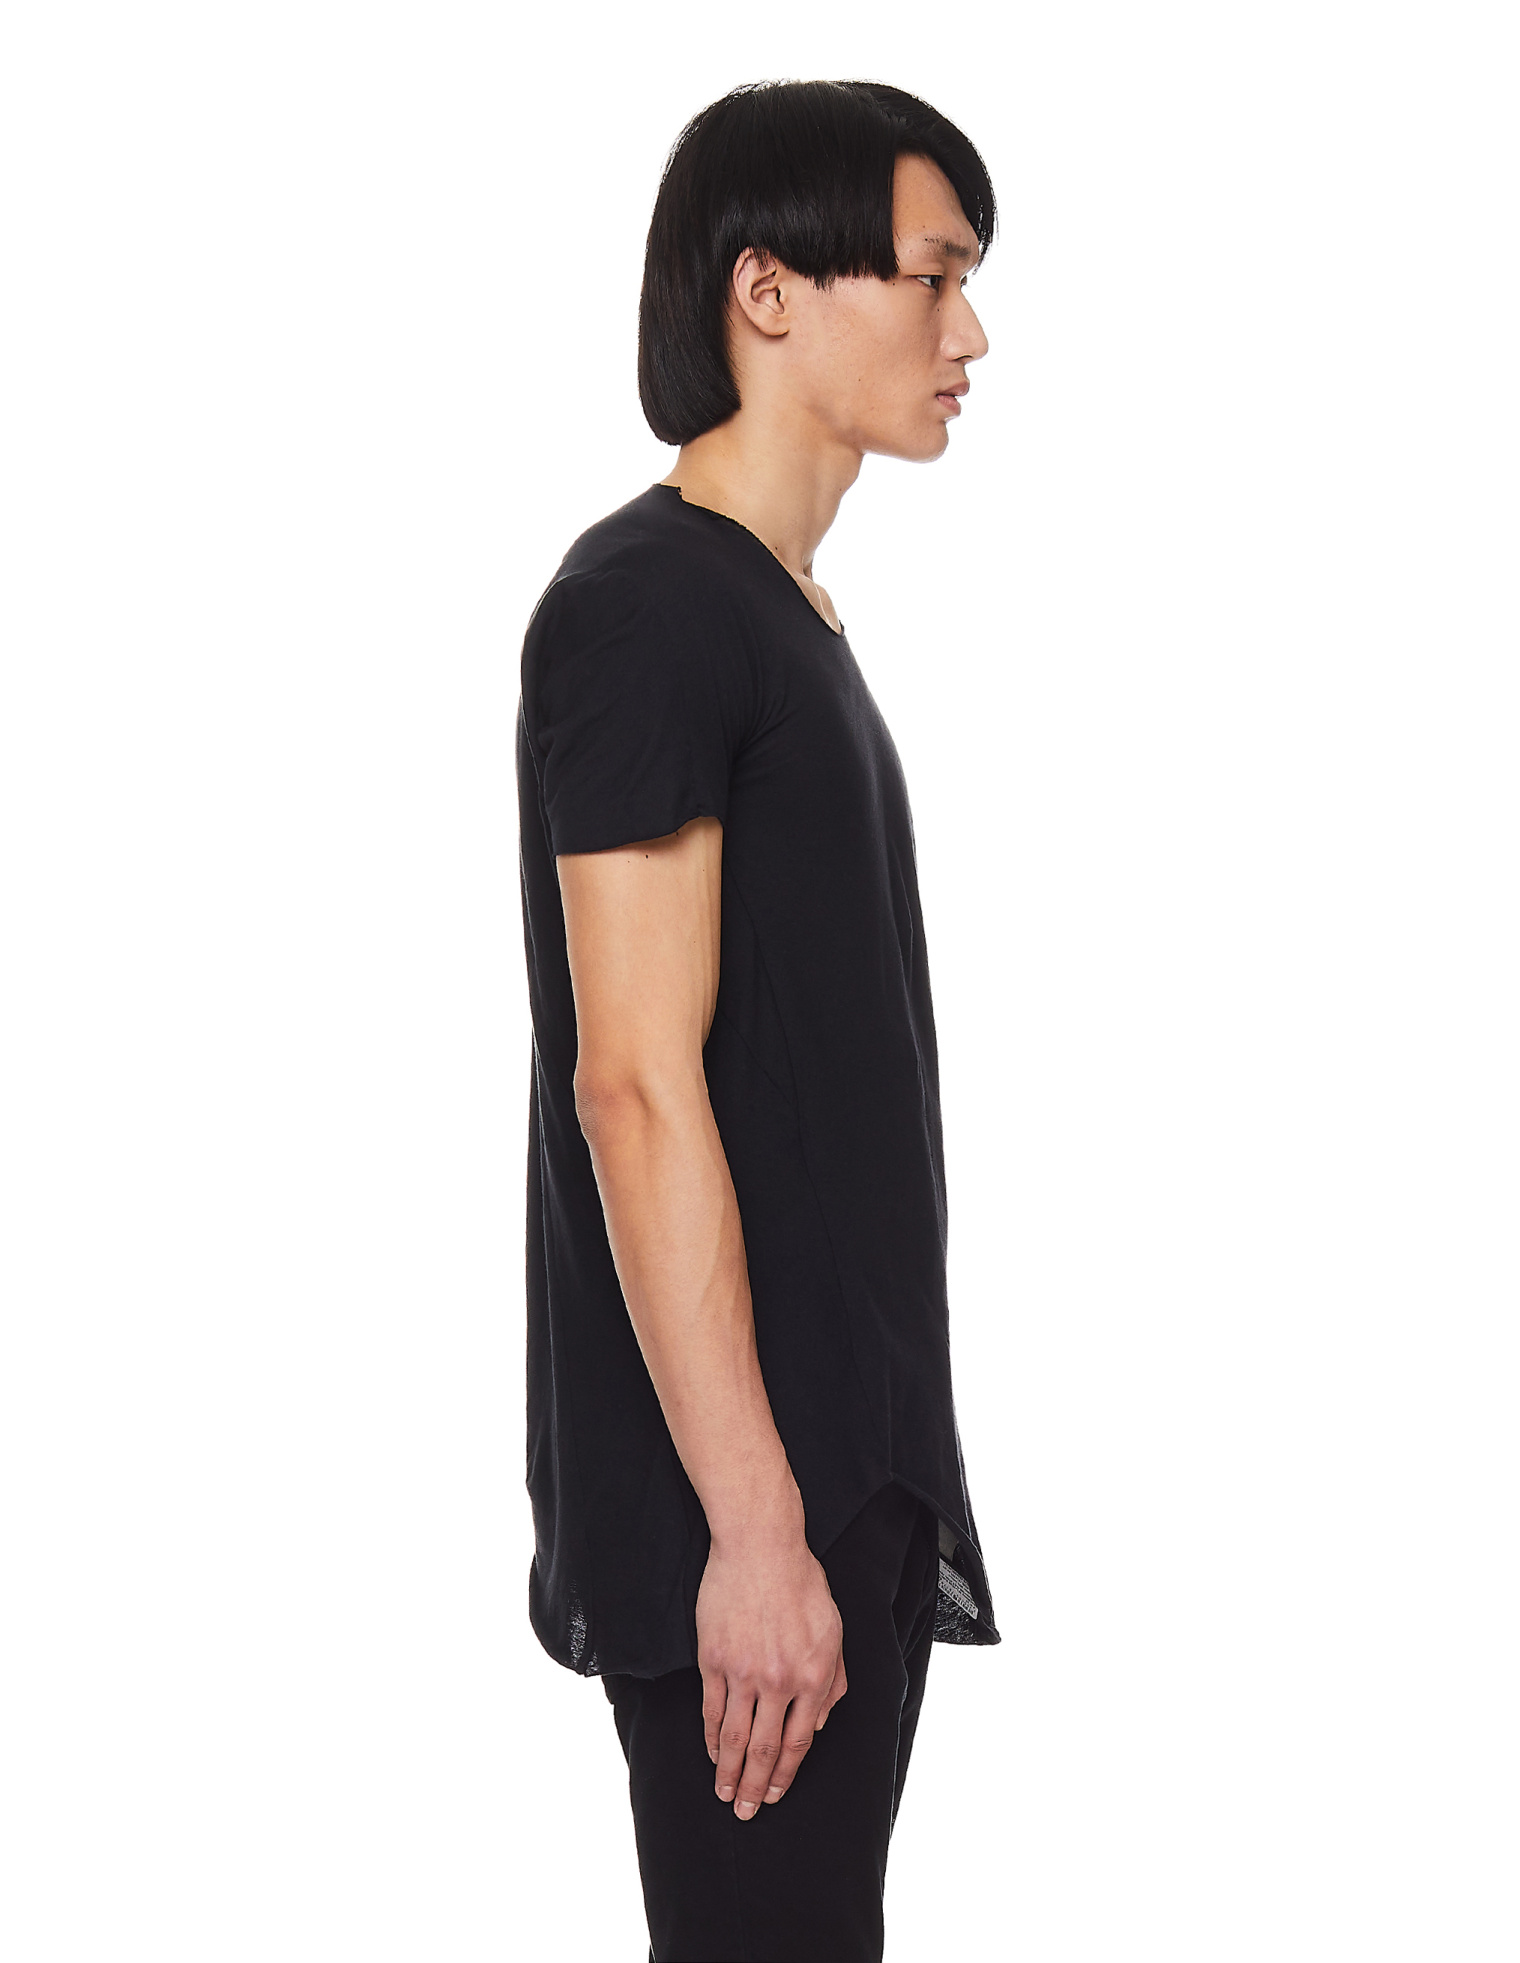 Leon Emanuel Blanck Black Cotton & Wool T-Shirt